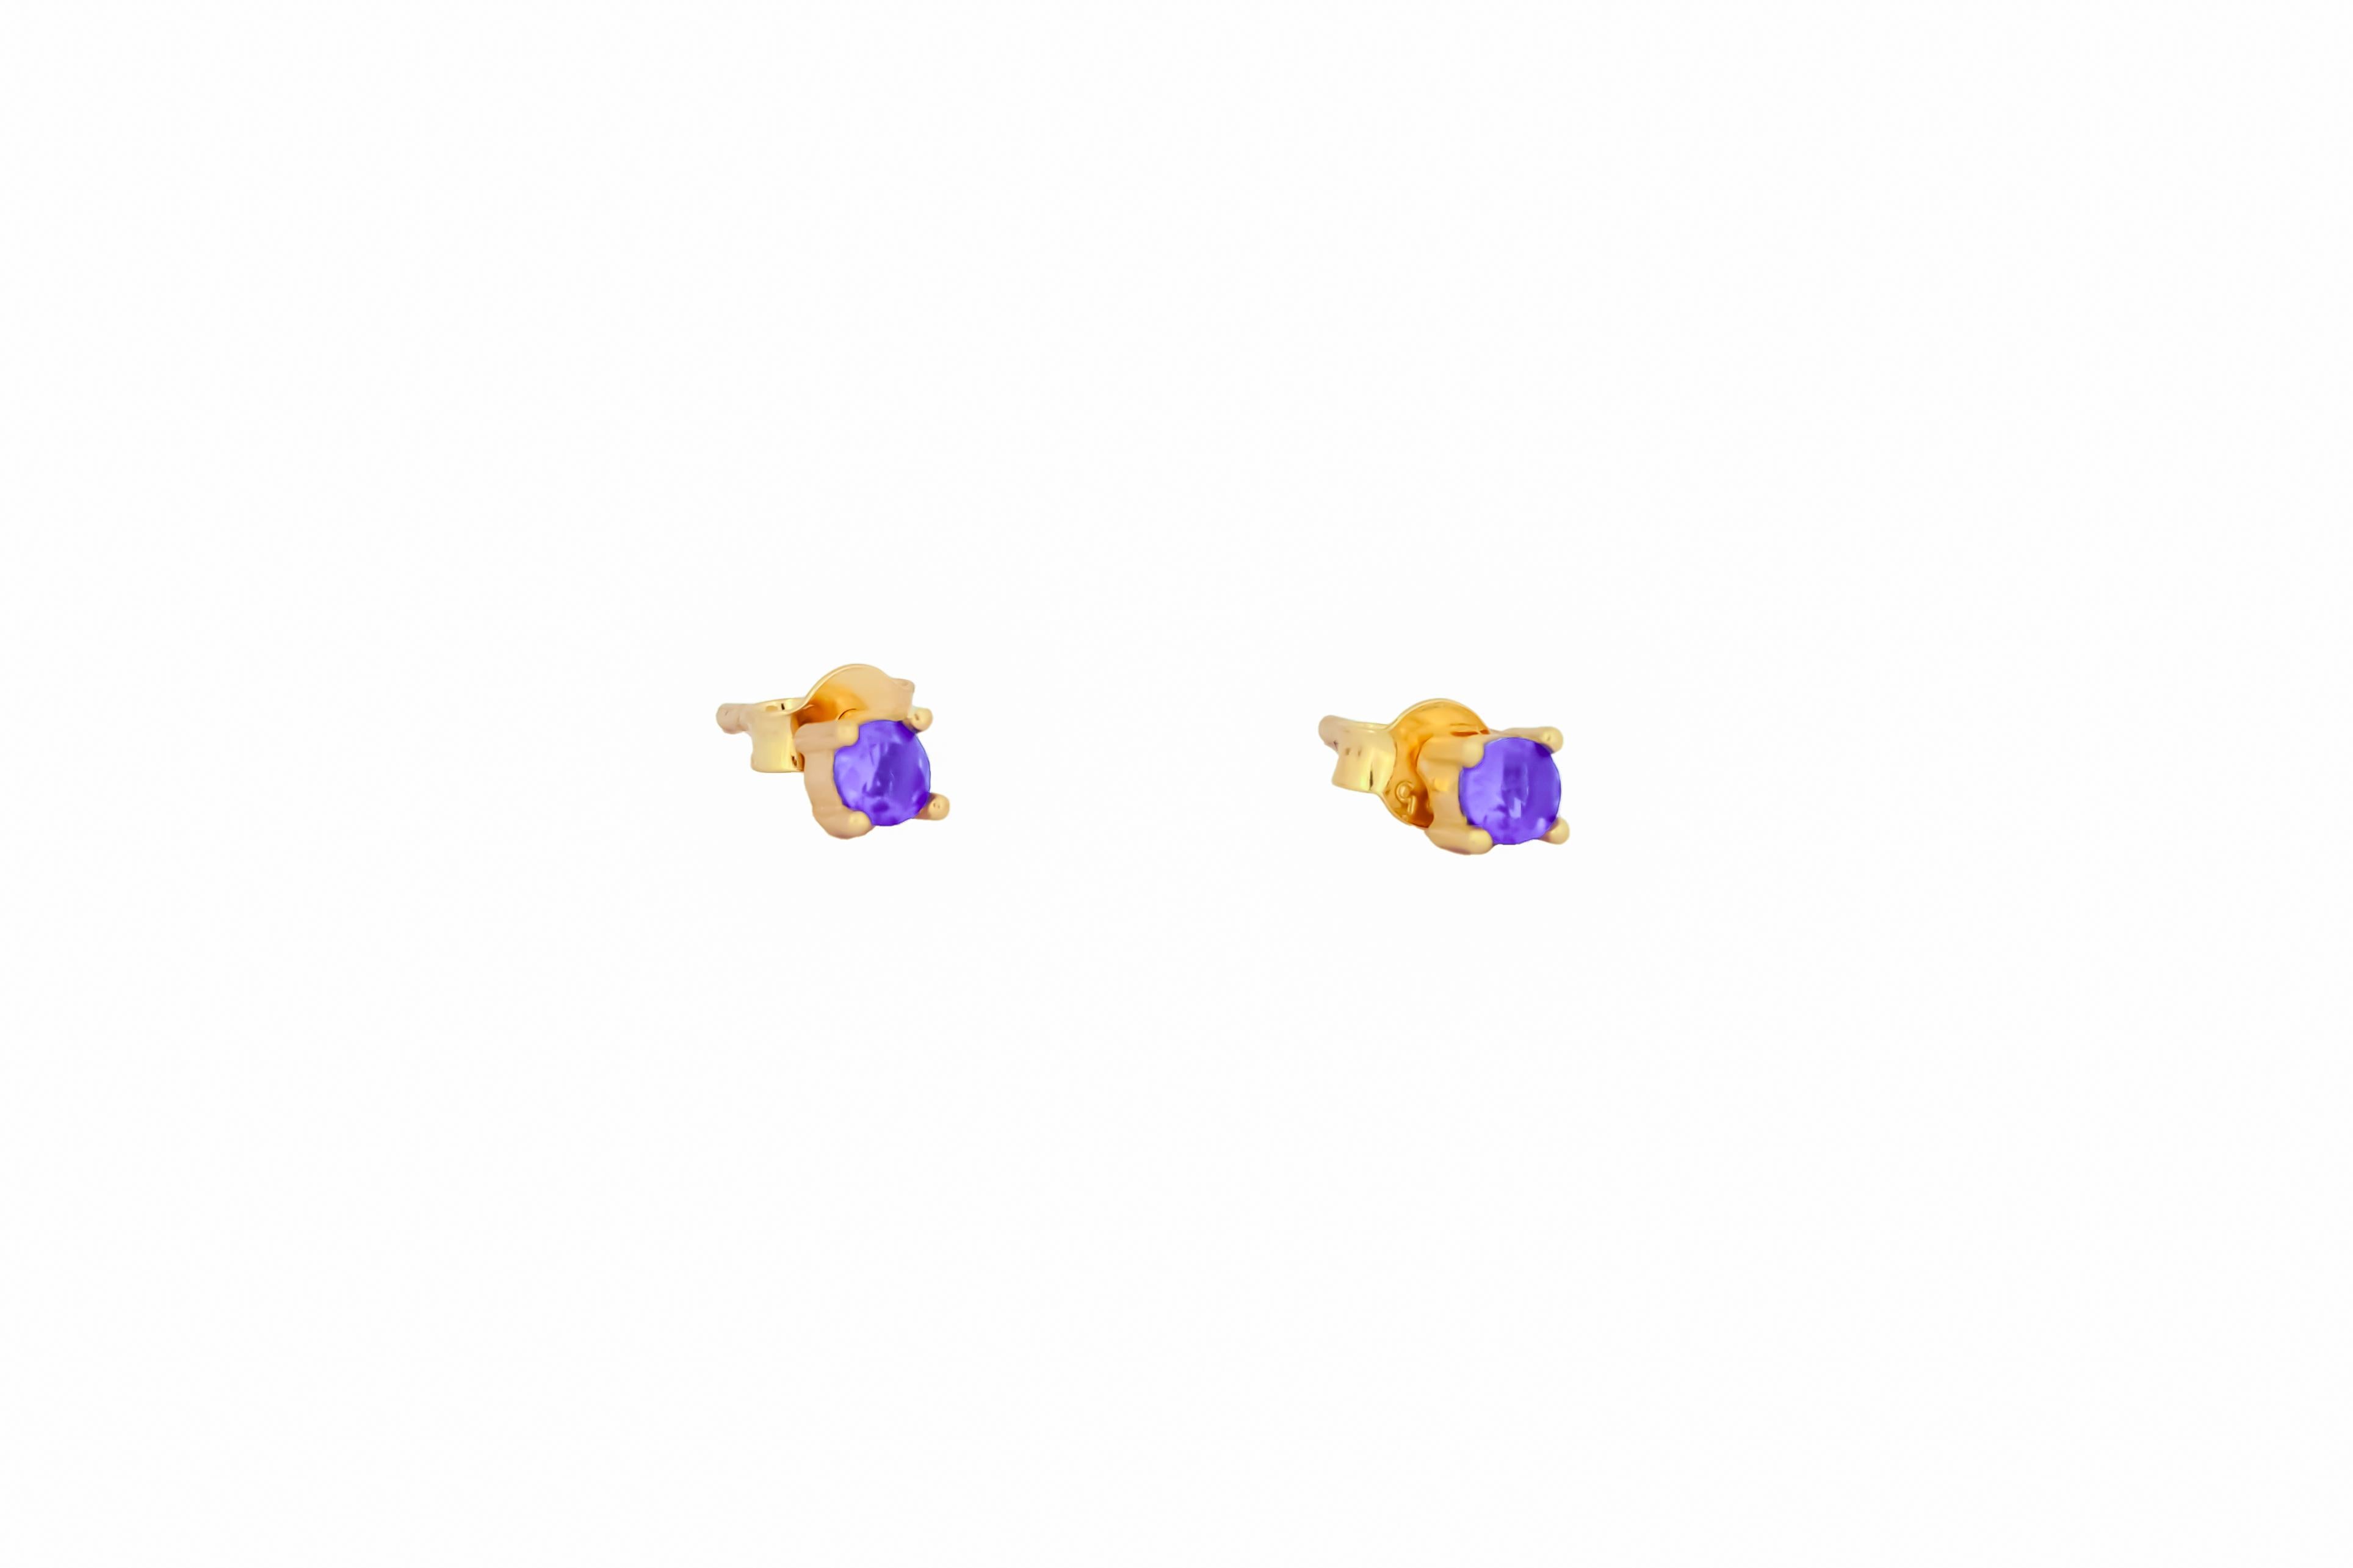 14 ct Gold Lab Amethyst Stud Earrings.  
3 mm amethyst earrings. Purple gemstone earrings. Small delicate gold earrings studs. Four prong studs. Minimalist sapphire earrings.

Metal: 14k solid gold
Weight: 1.5 gr.
Earrings goes with gold